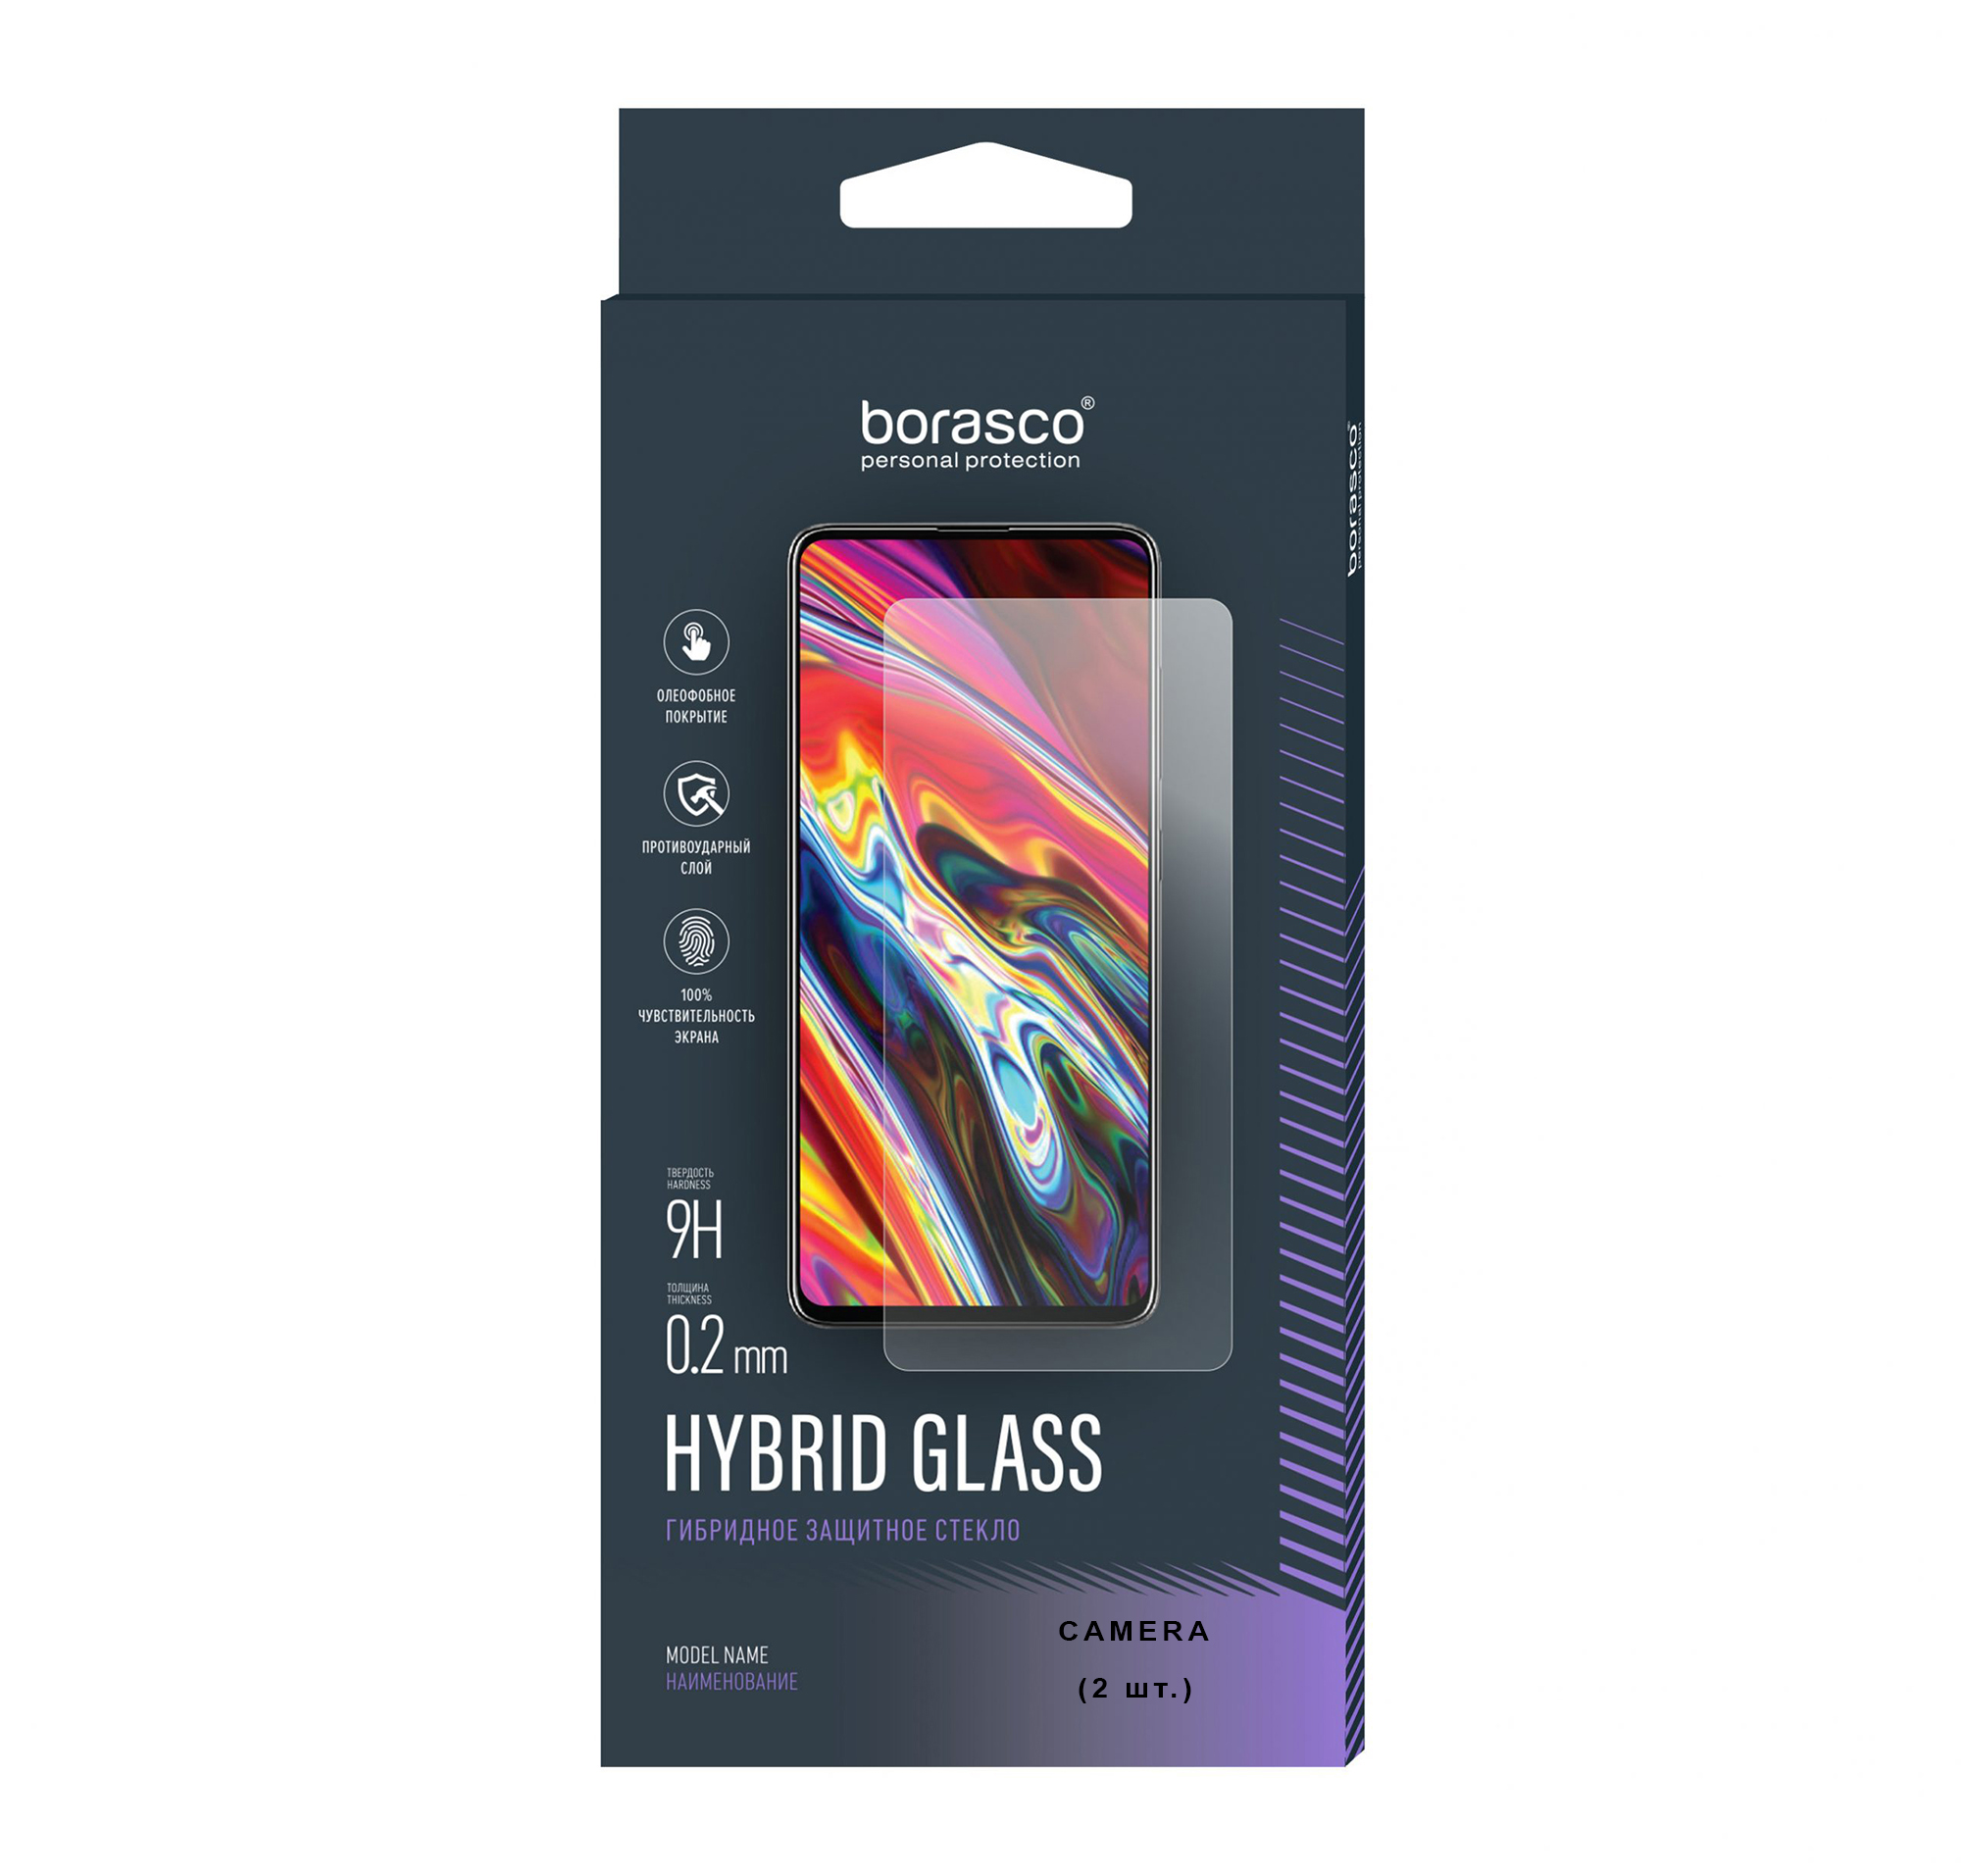 Защитное стекло (Экран+Камера) Hybrid Glass для Huawei P30 lite защитное стекло для камеры hybrid glass для huawei p30 lite